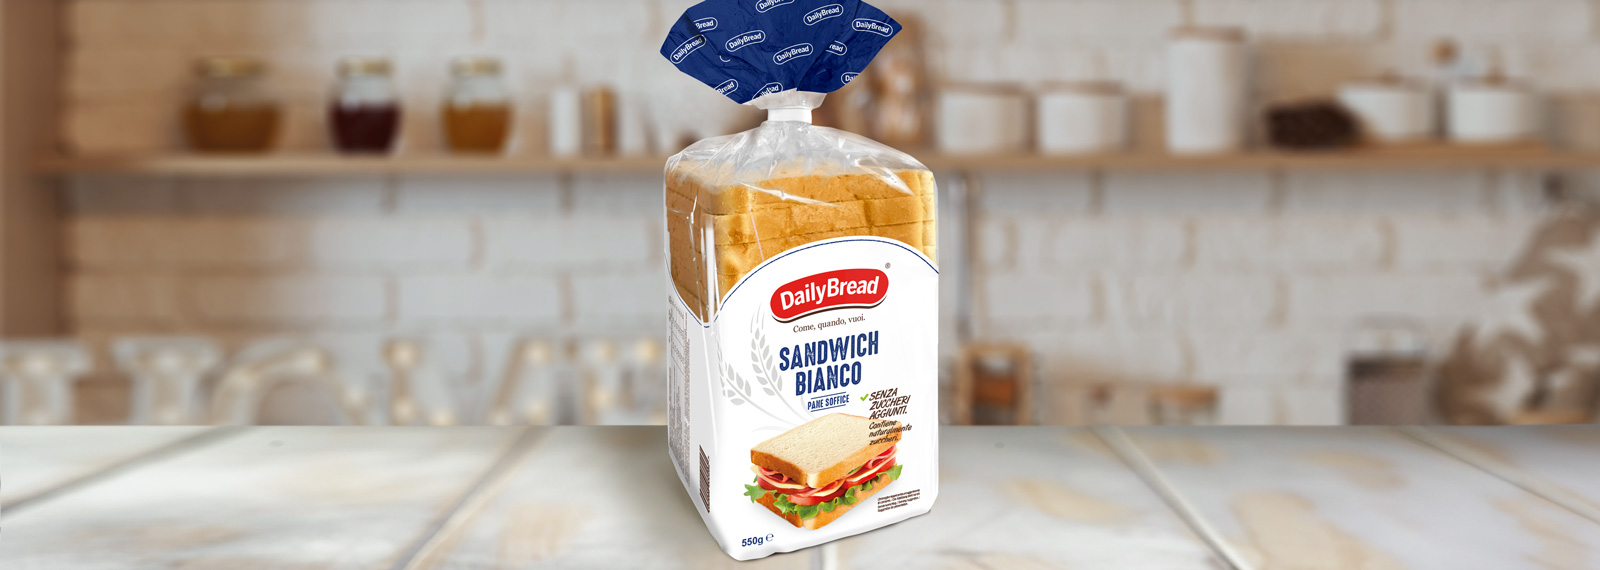 Sandwich Bianco